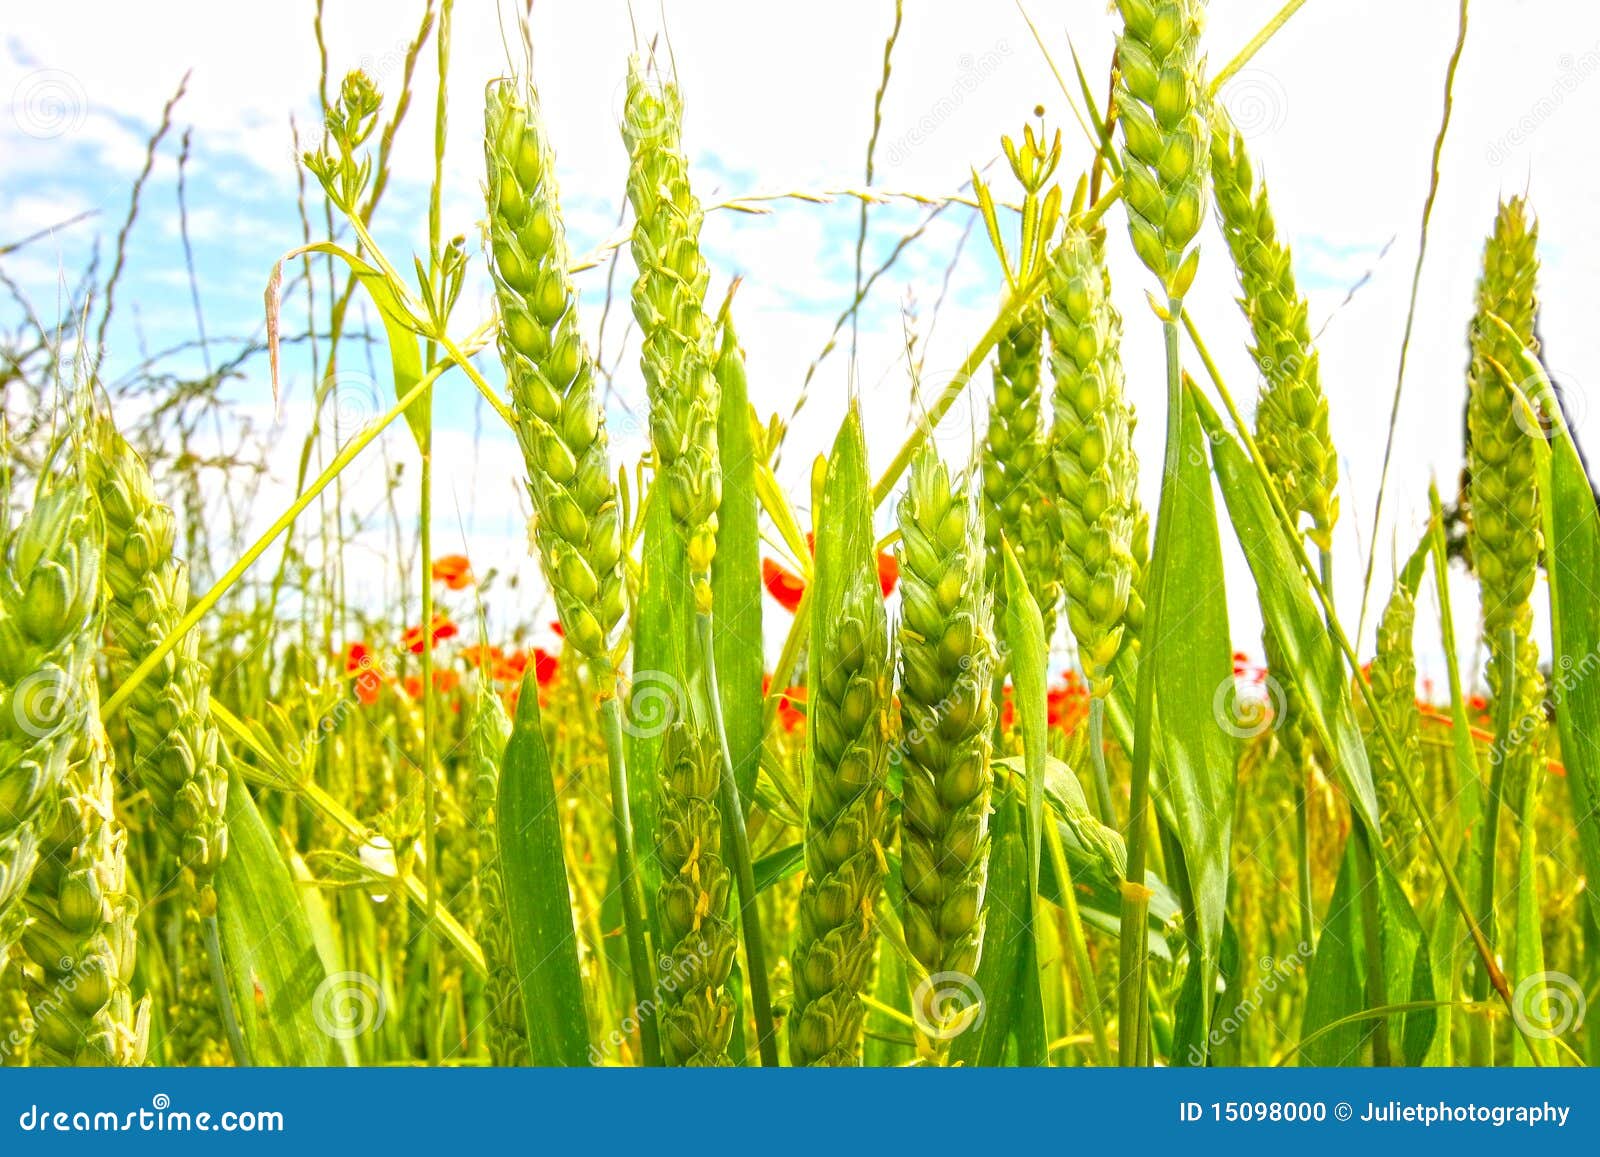 young-wheat-growing-fields-15098000.jpg